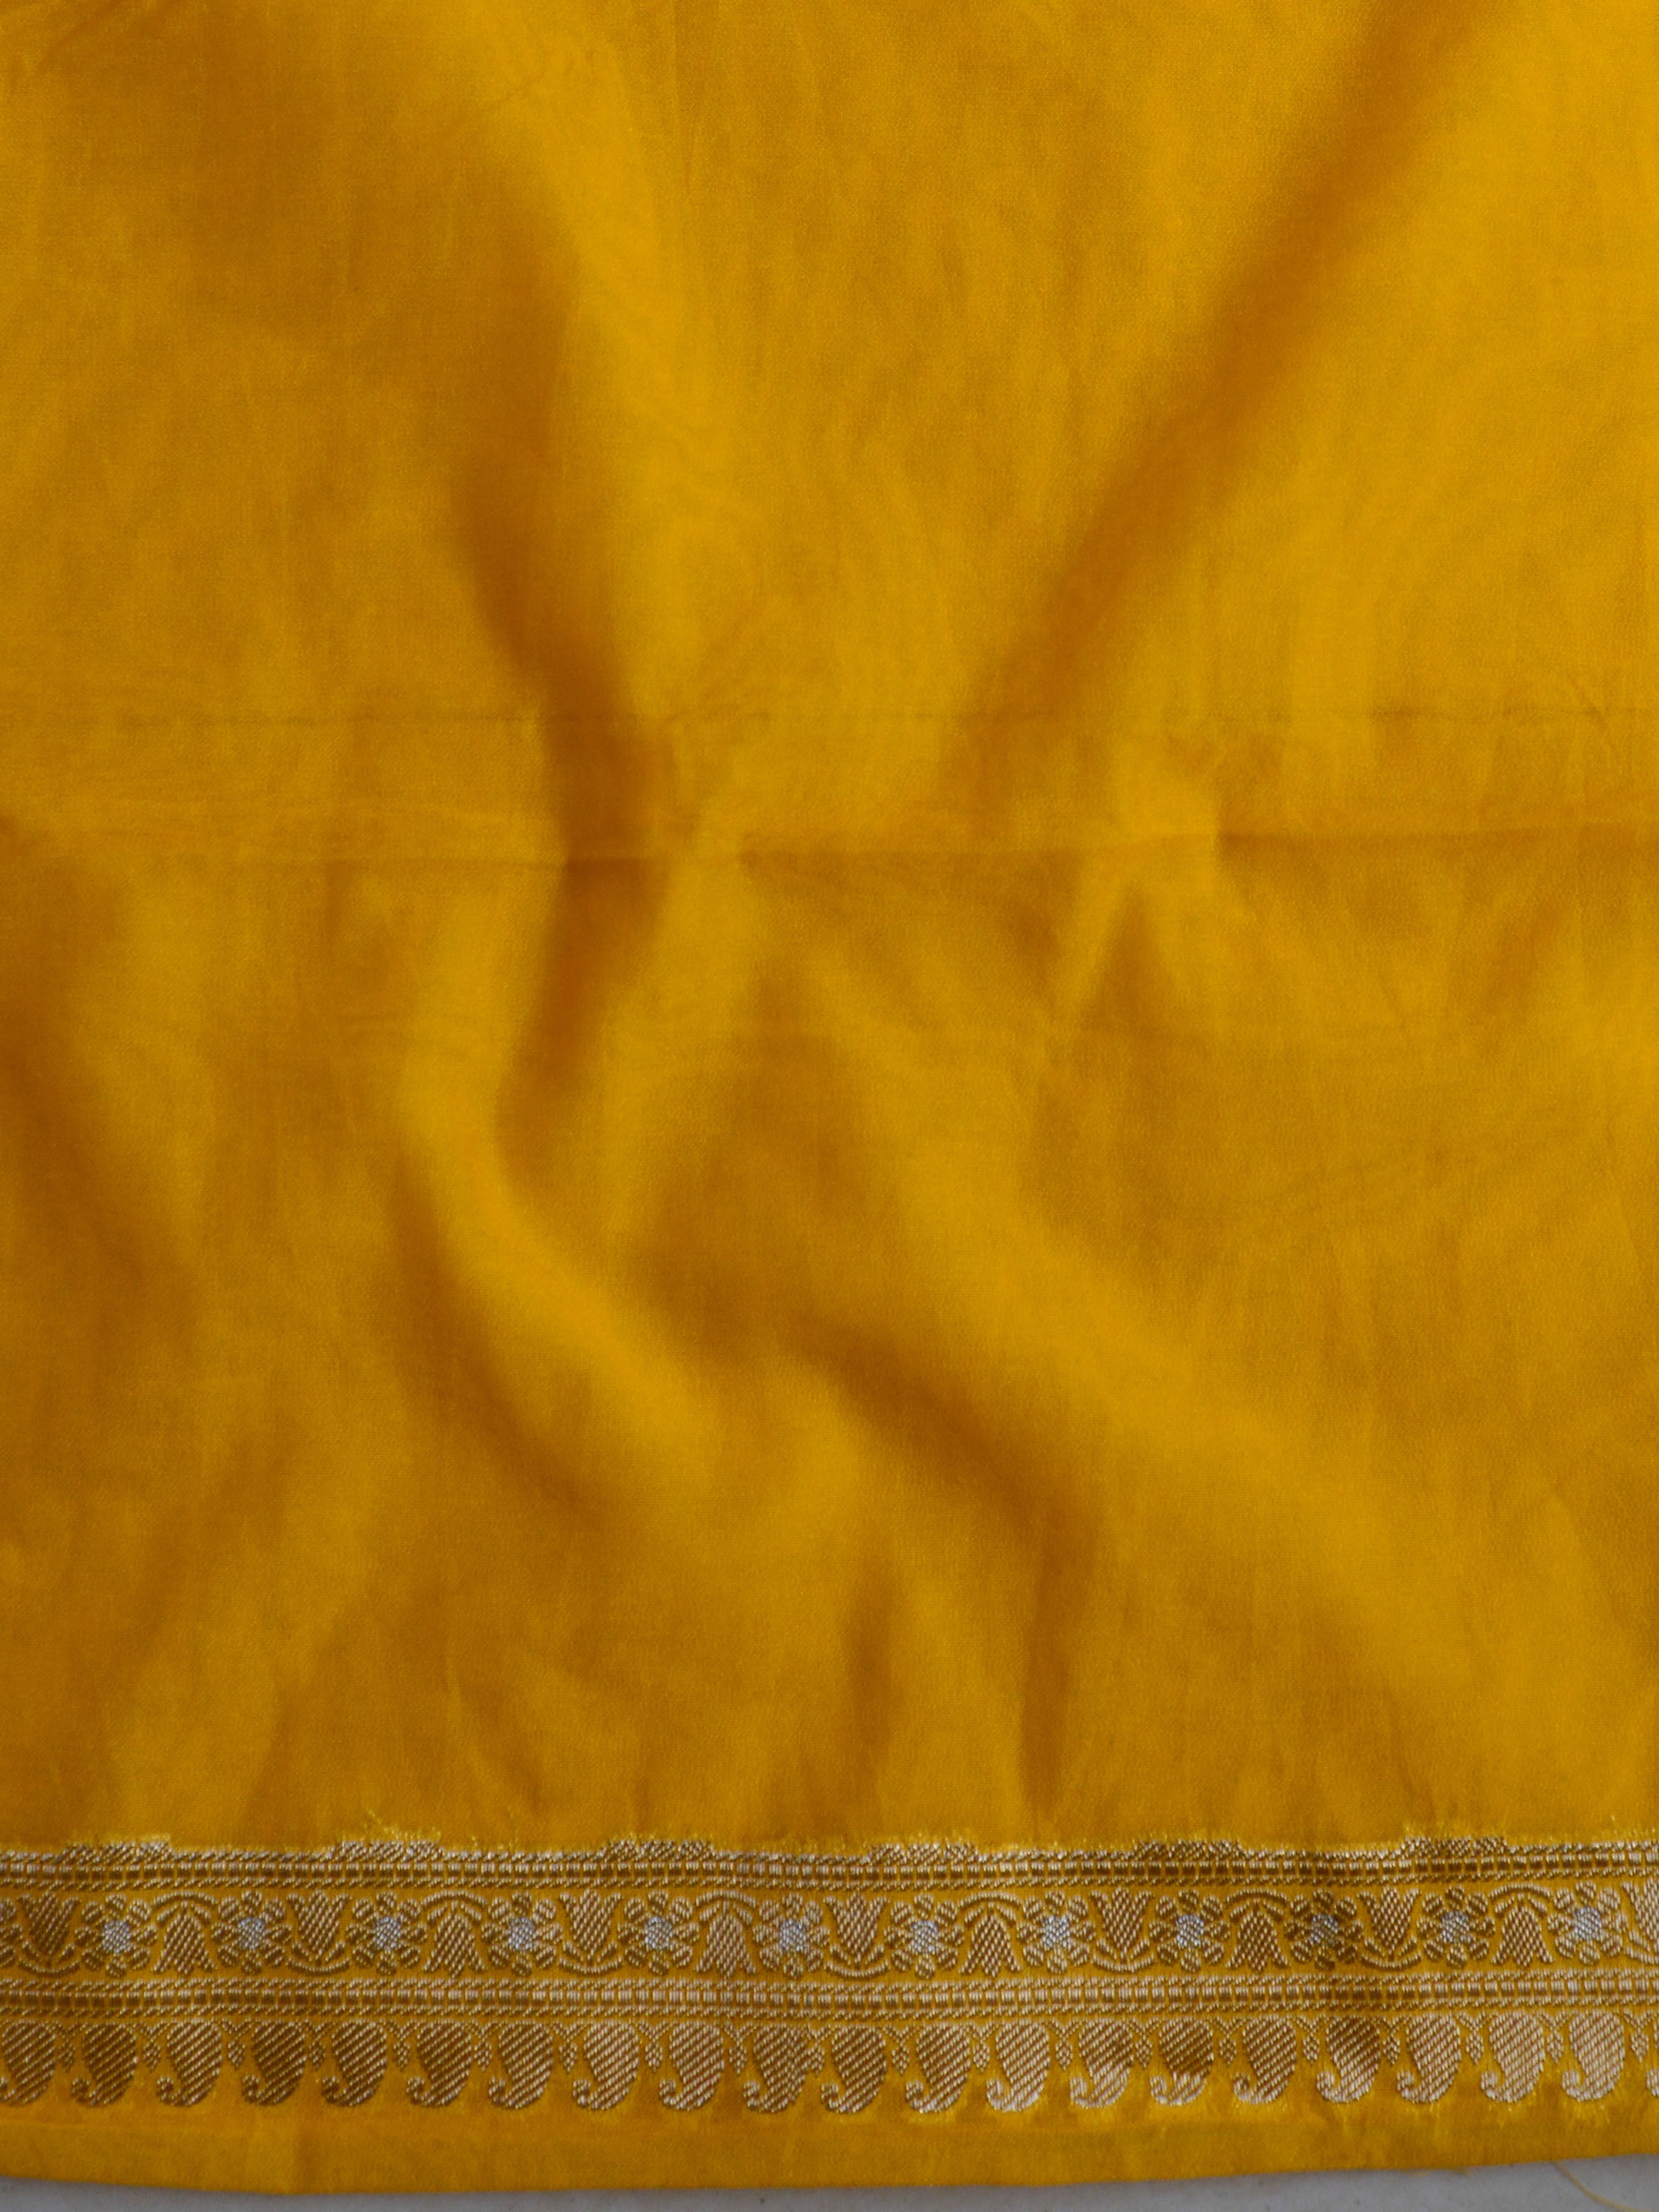 Banarasee Handwoven Semi-Chiffon Saree With Silver Zari Buti & Border-Mustard Yellow